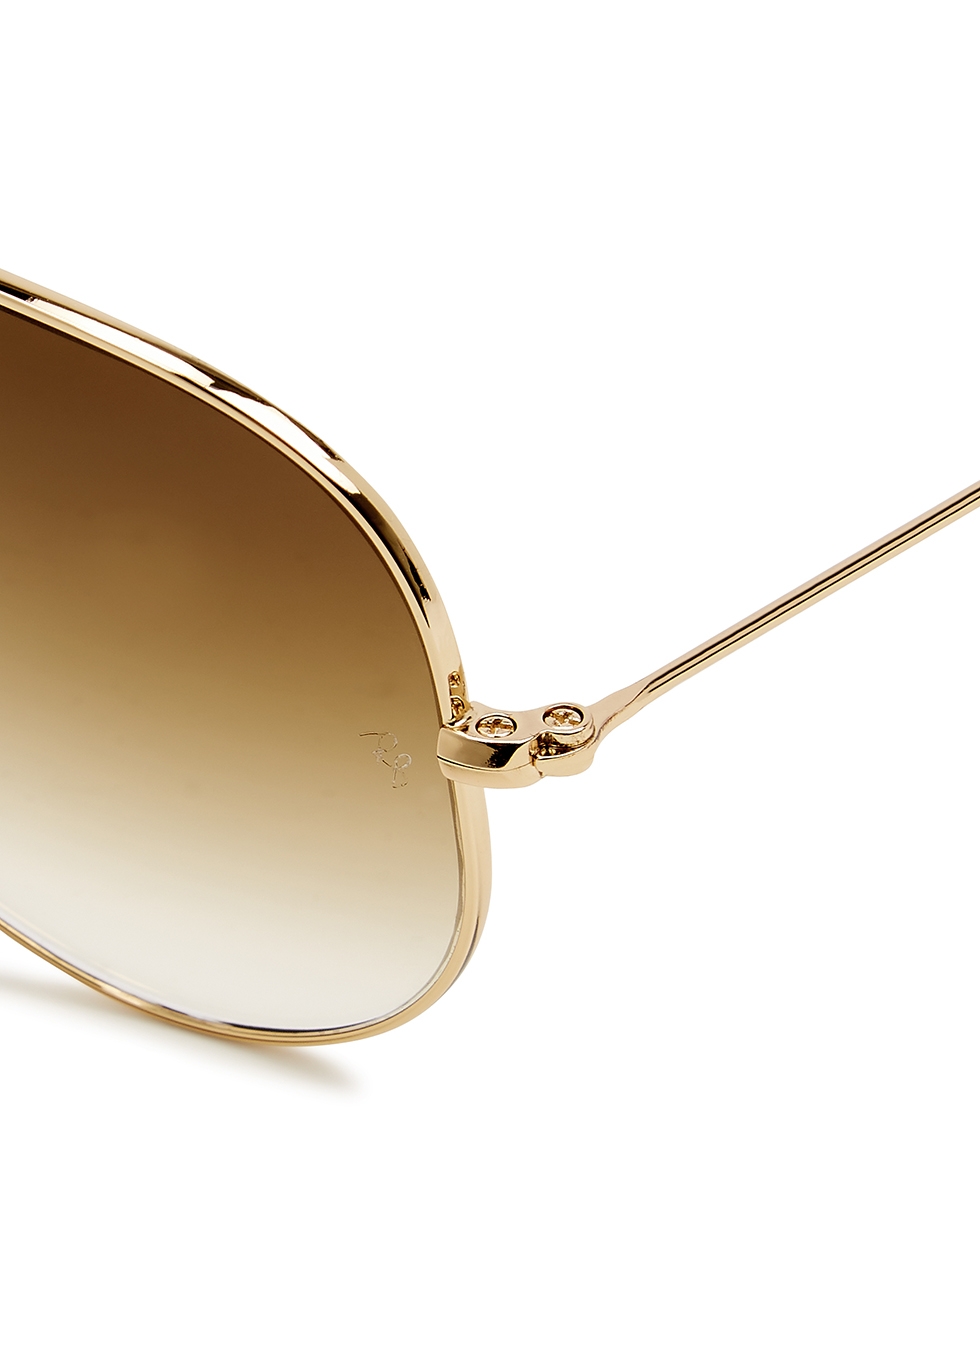 ray ban gold aviator sunglasses